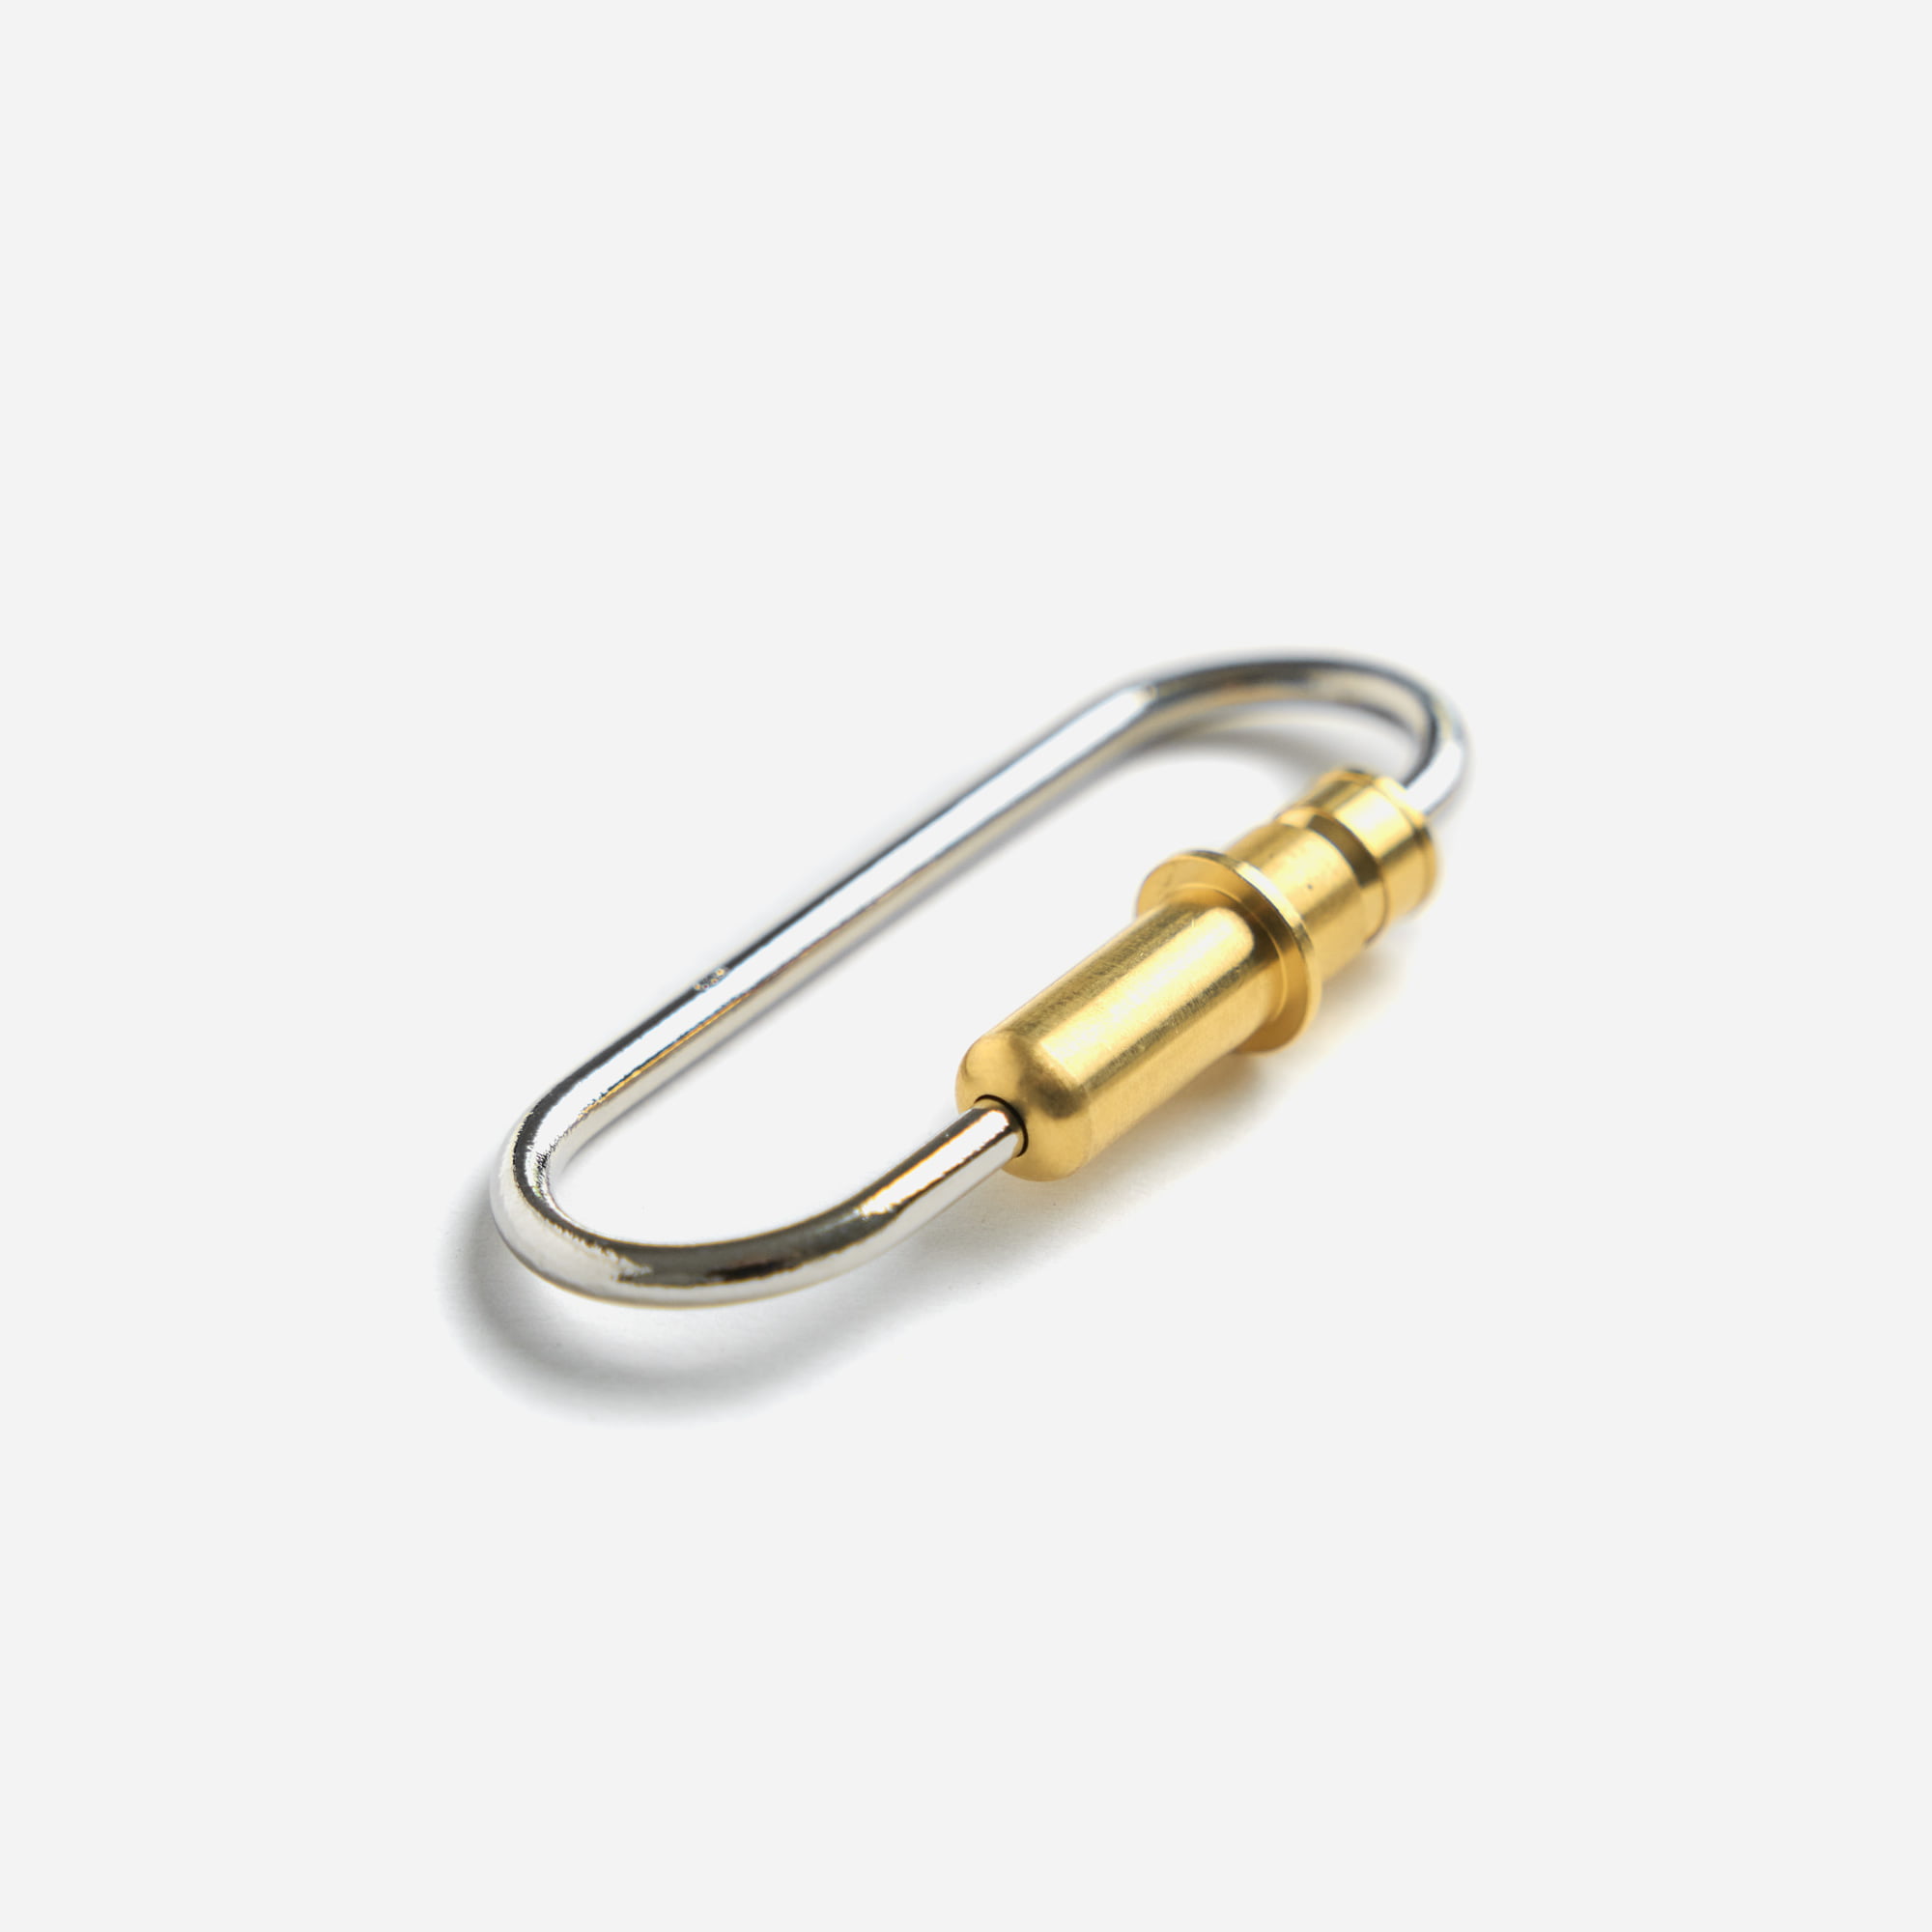 Polished Brass Bullet Carabiner by Candy Design & Works